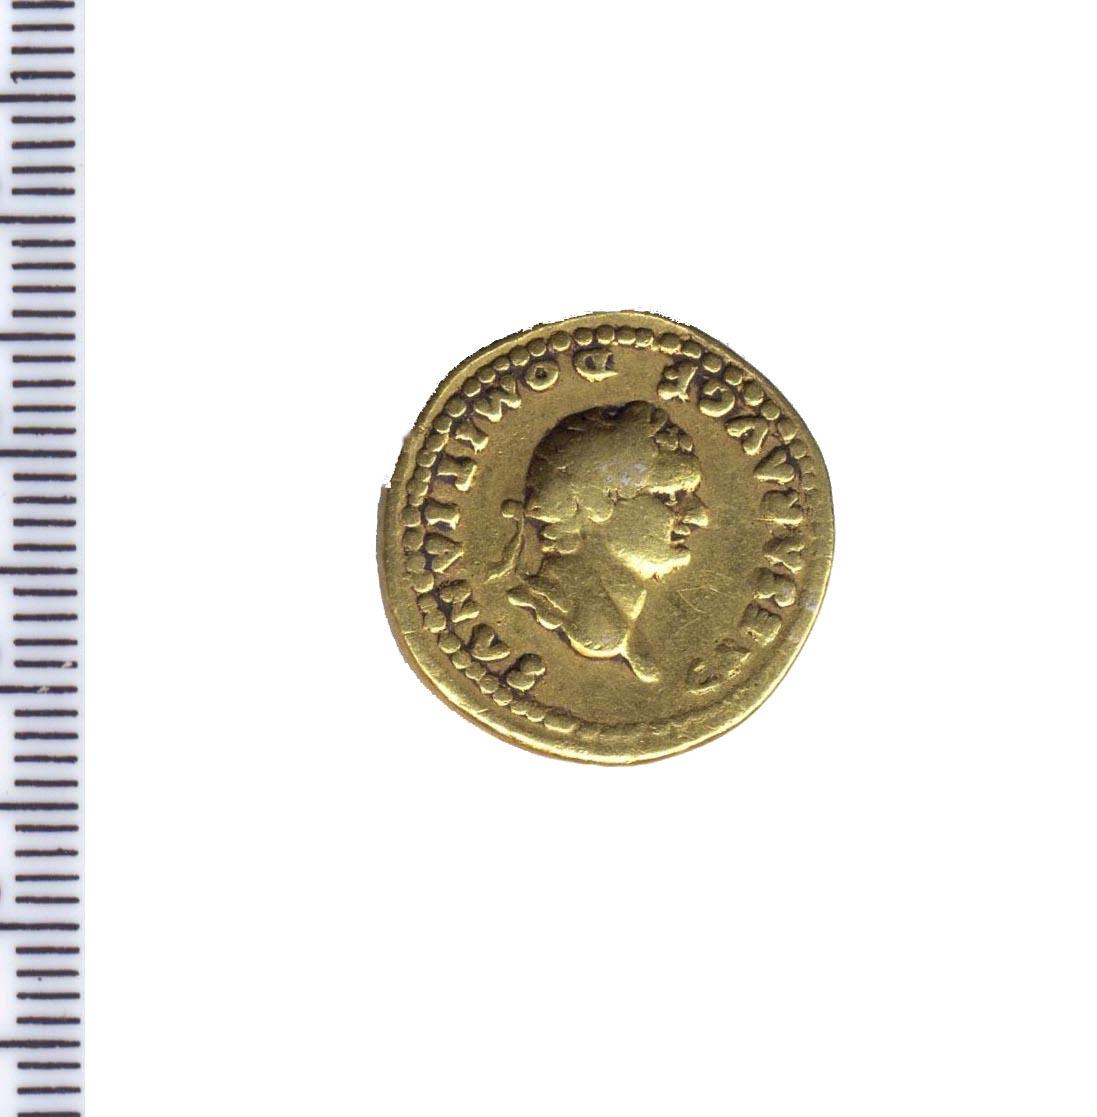 moneta - aureo - produzione romana imperiale (sec. I d.C)